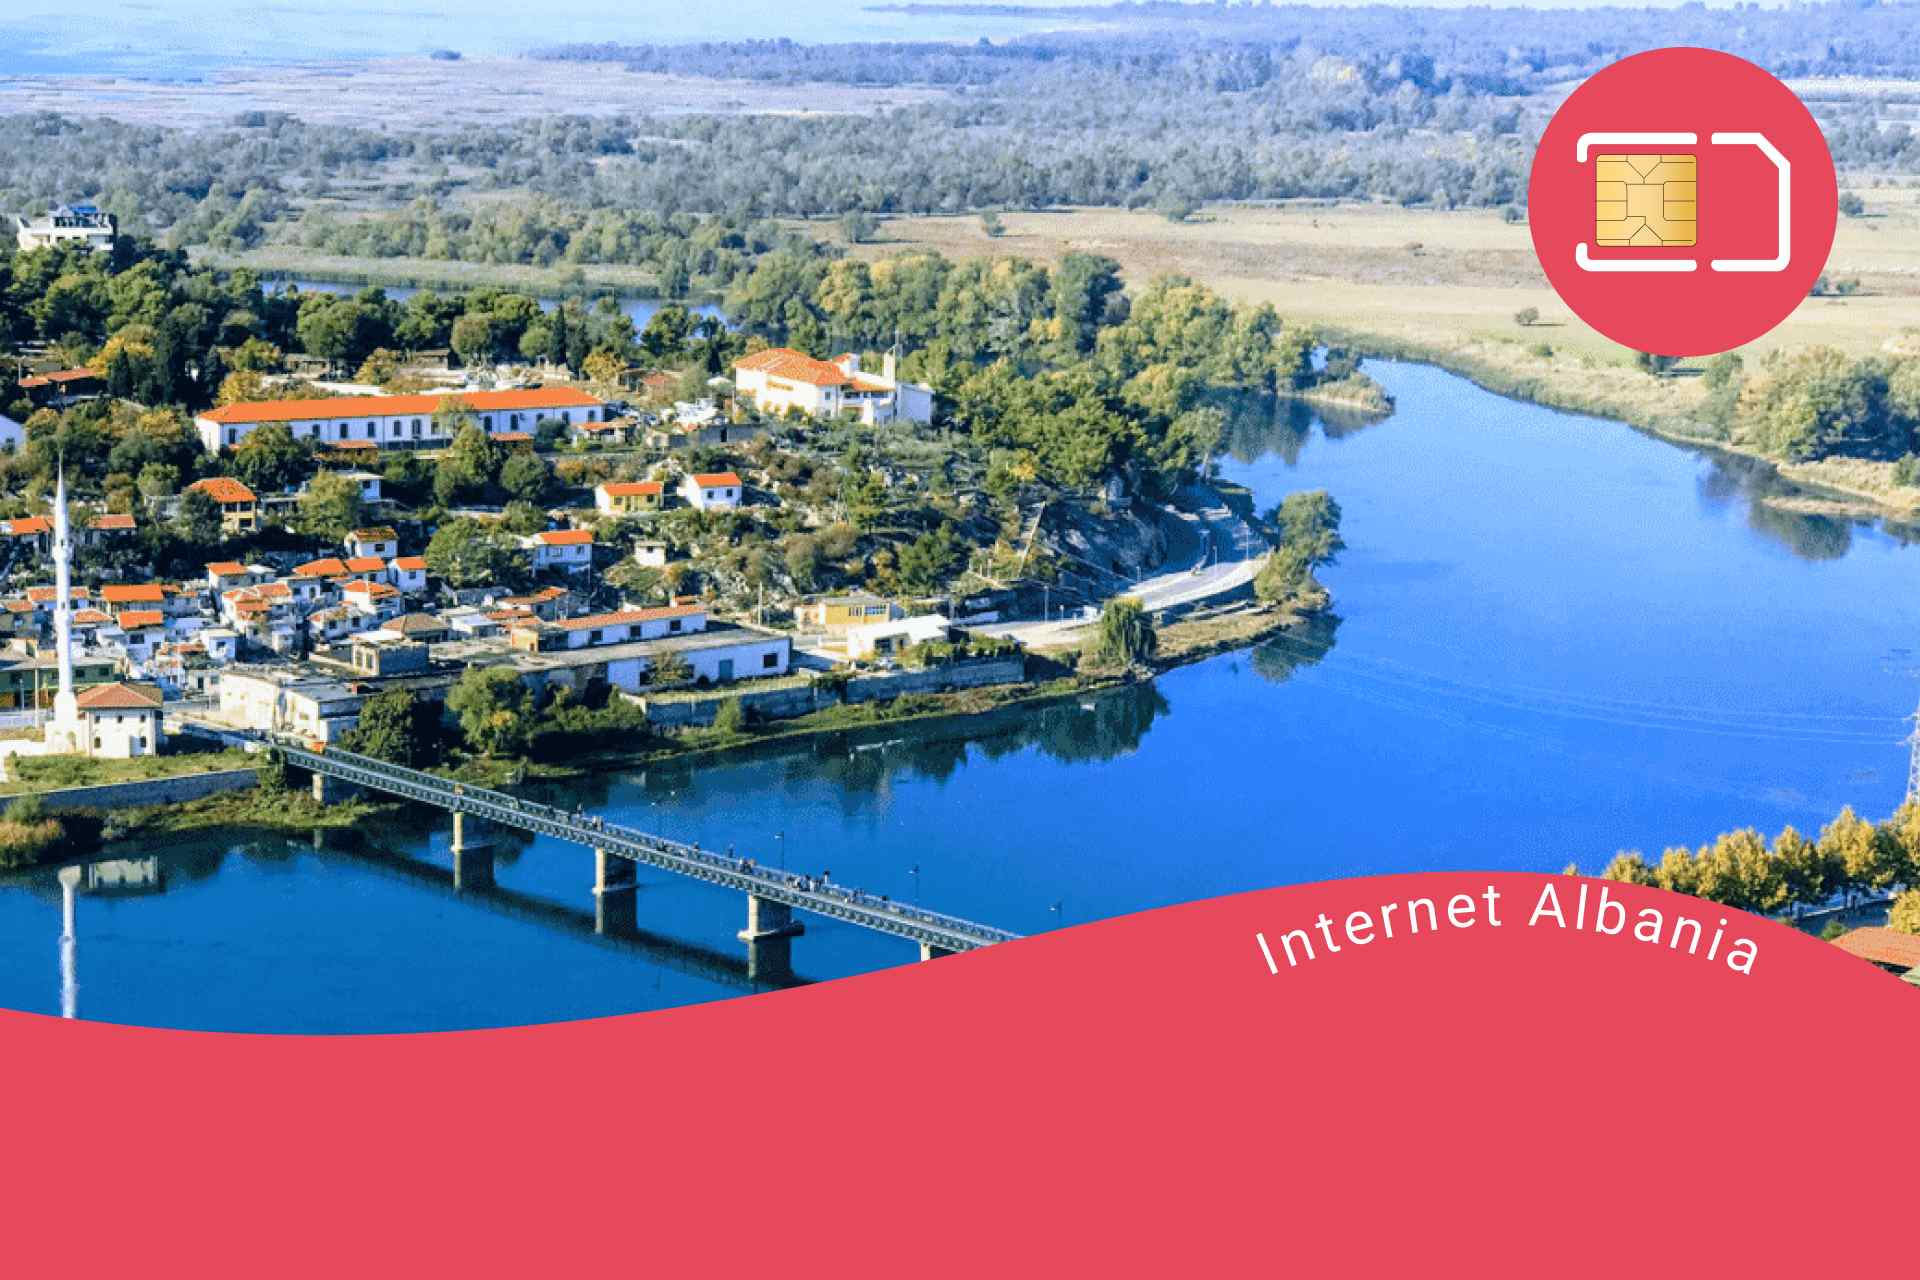 internet Albania, Holafly